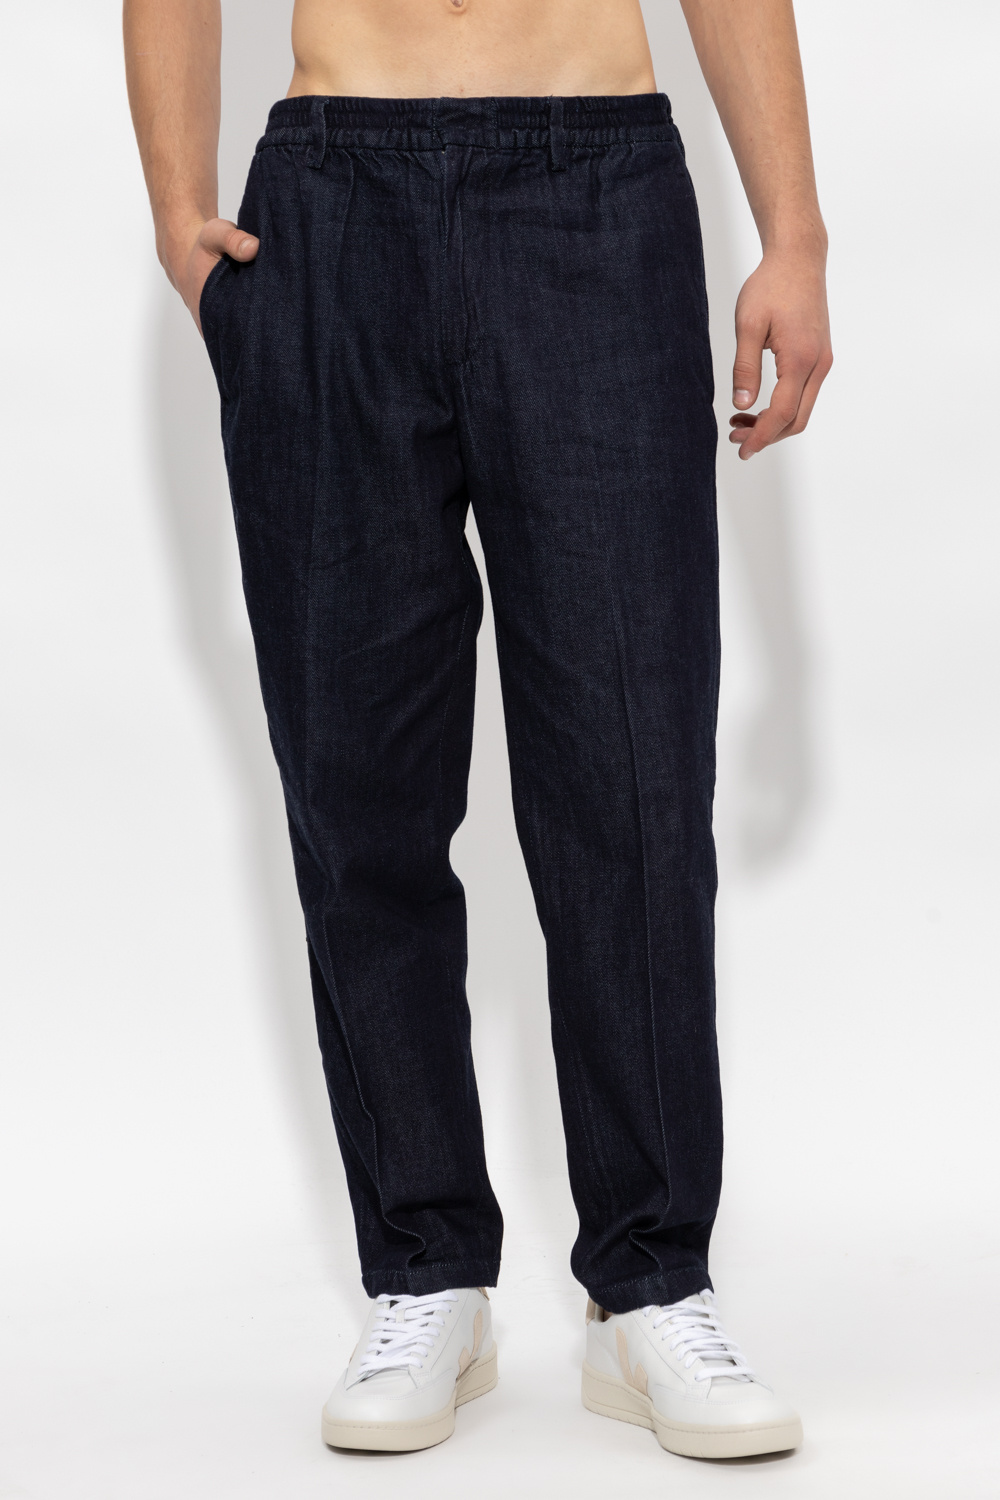 Emporio van armani Jeans with elastic waistband